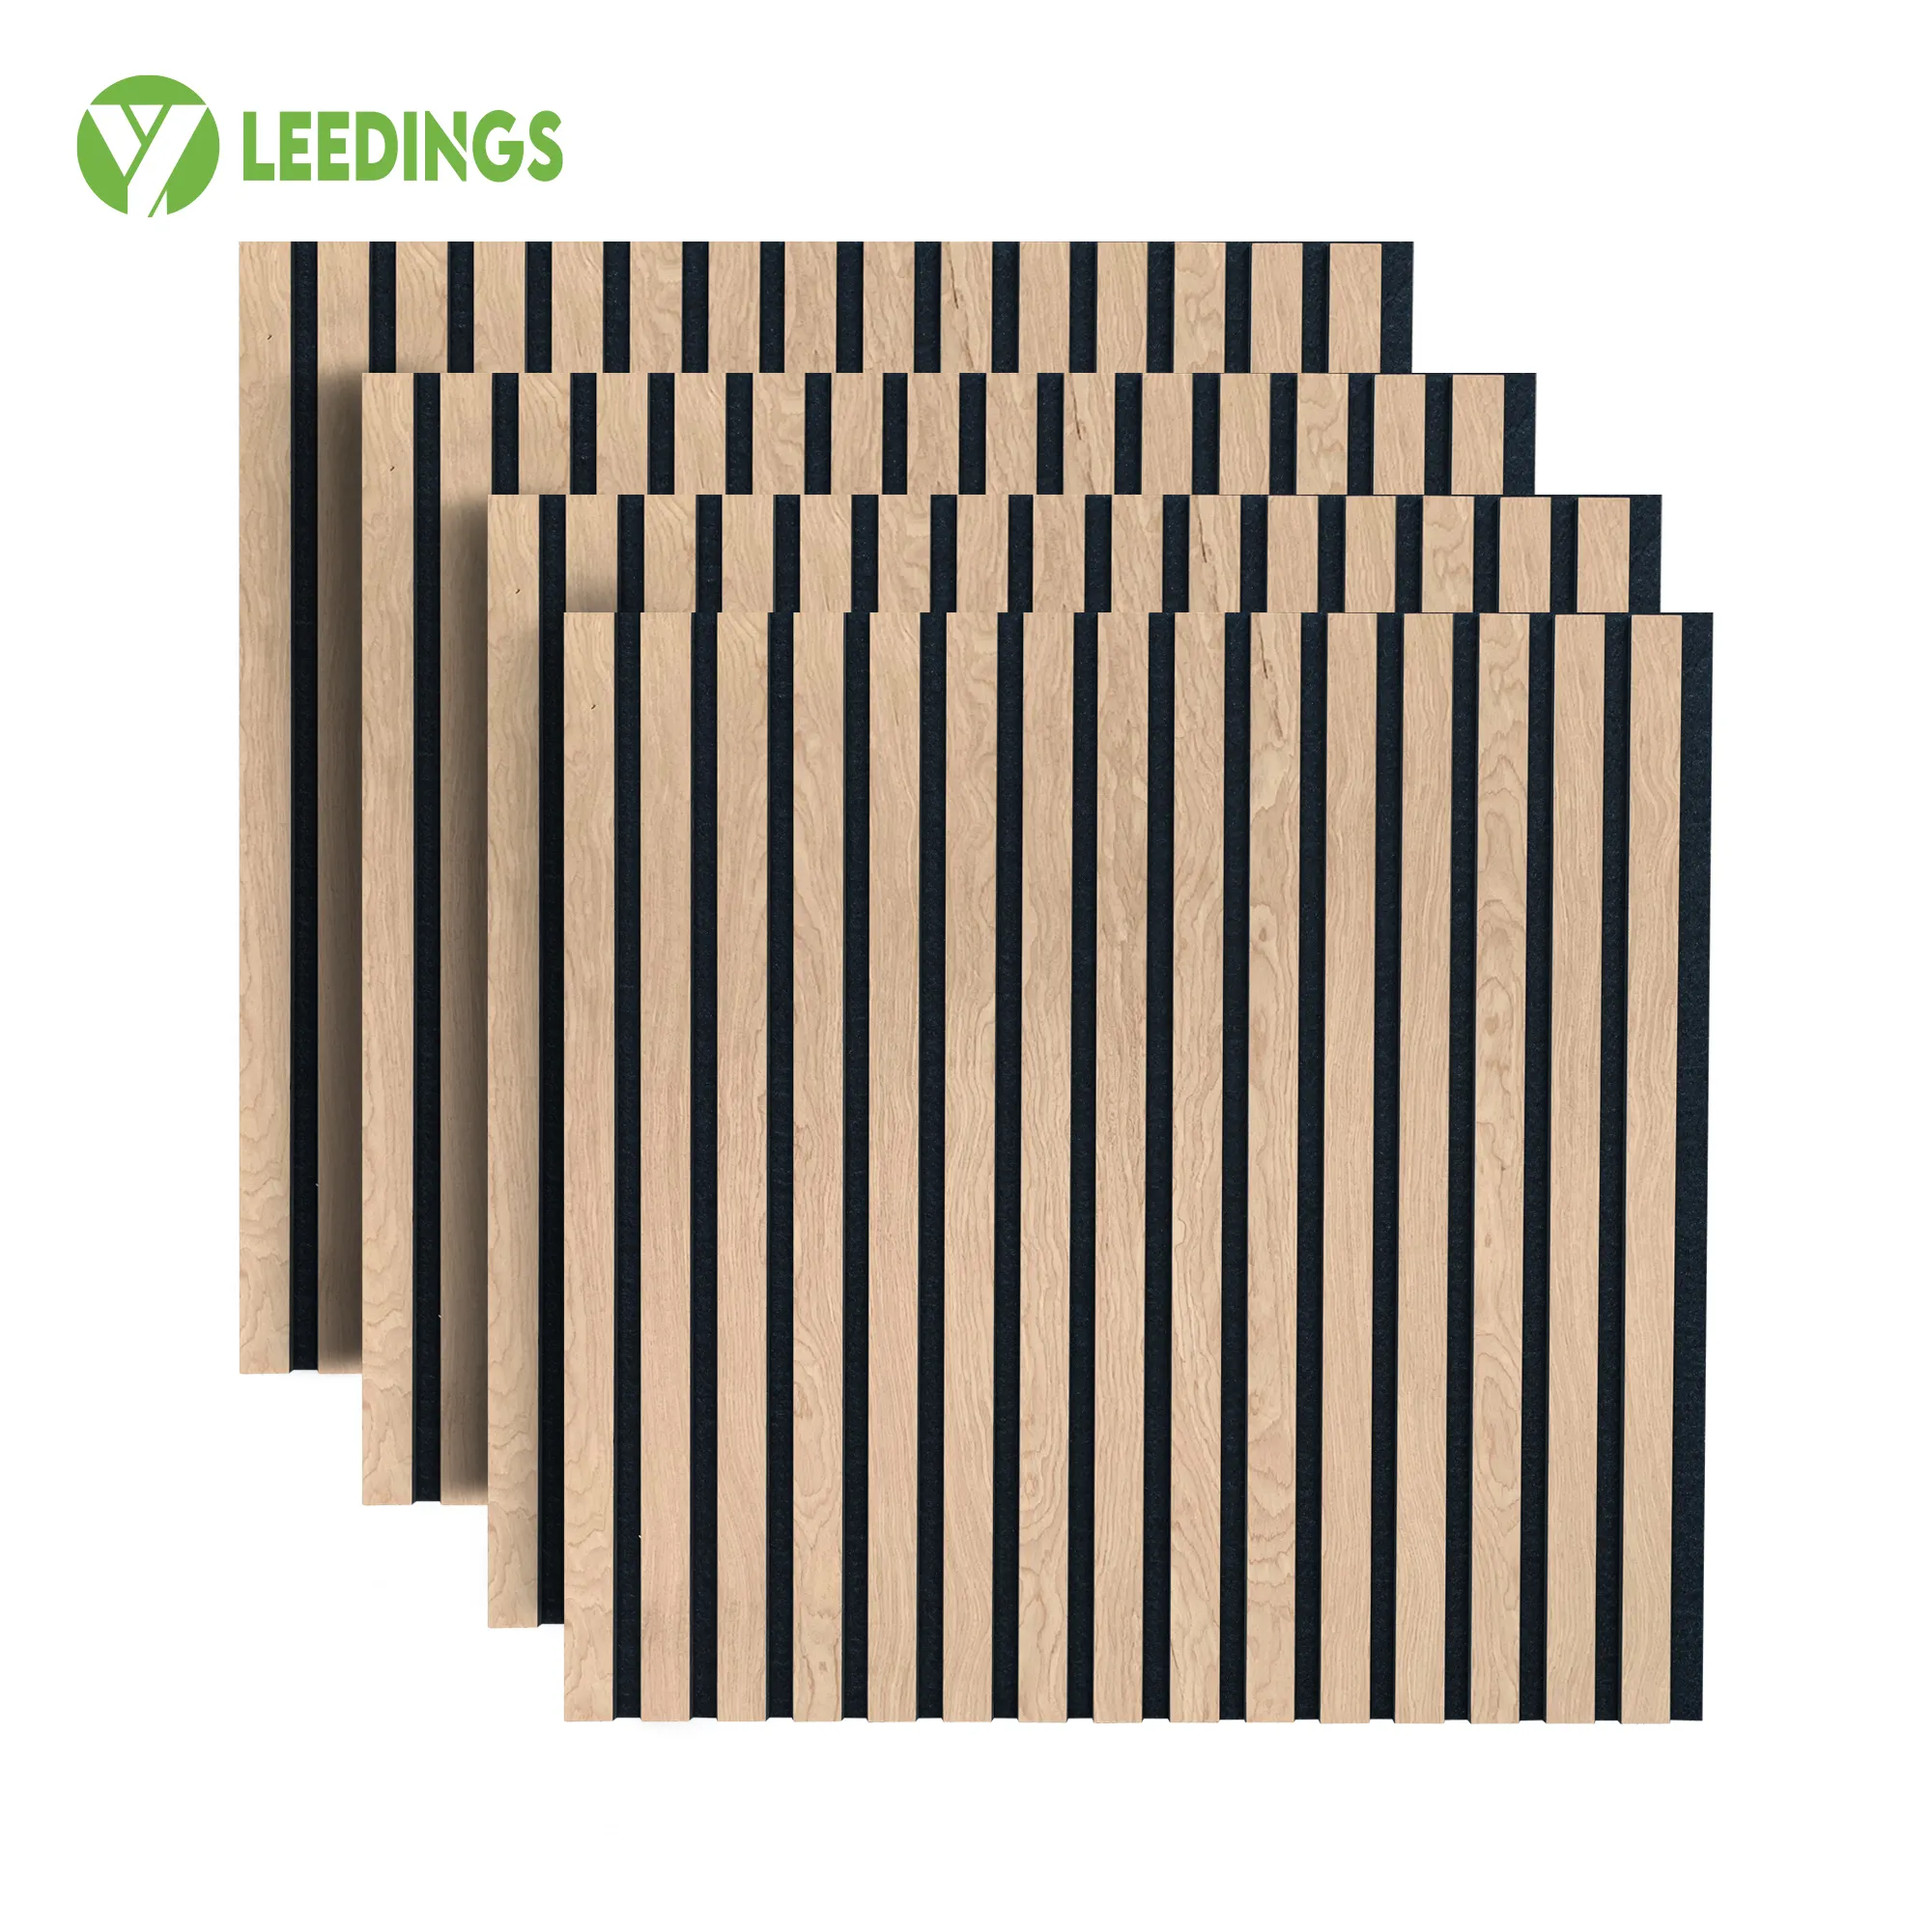 Leedings Acoustic Slat Wall Panel Supplier Acoustic Panels Manufacturer Slatted Wood Wall Panel Akupanel Veneer